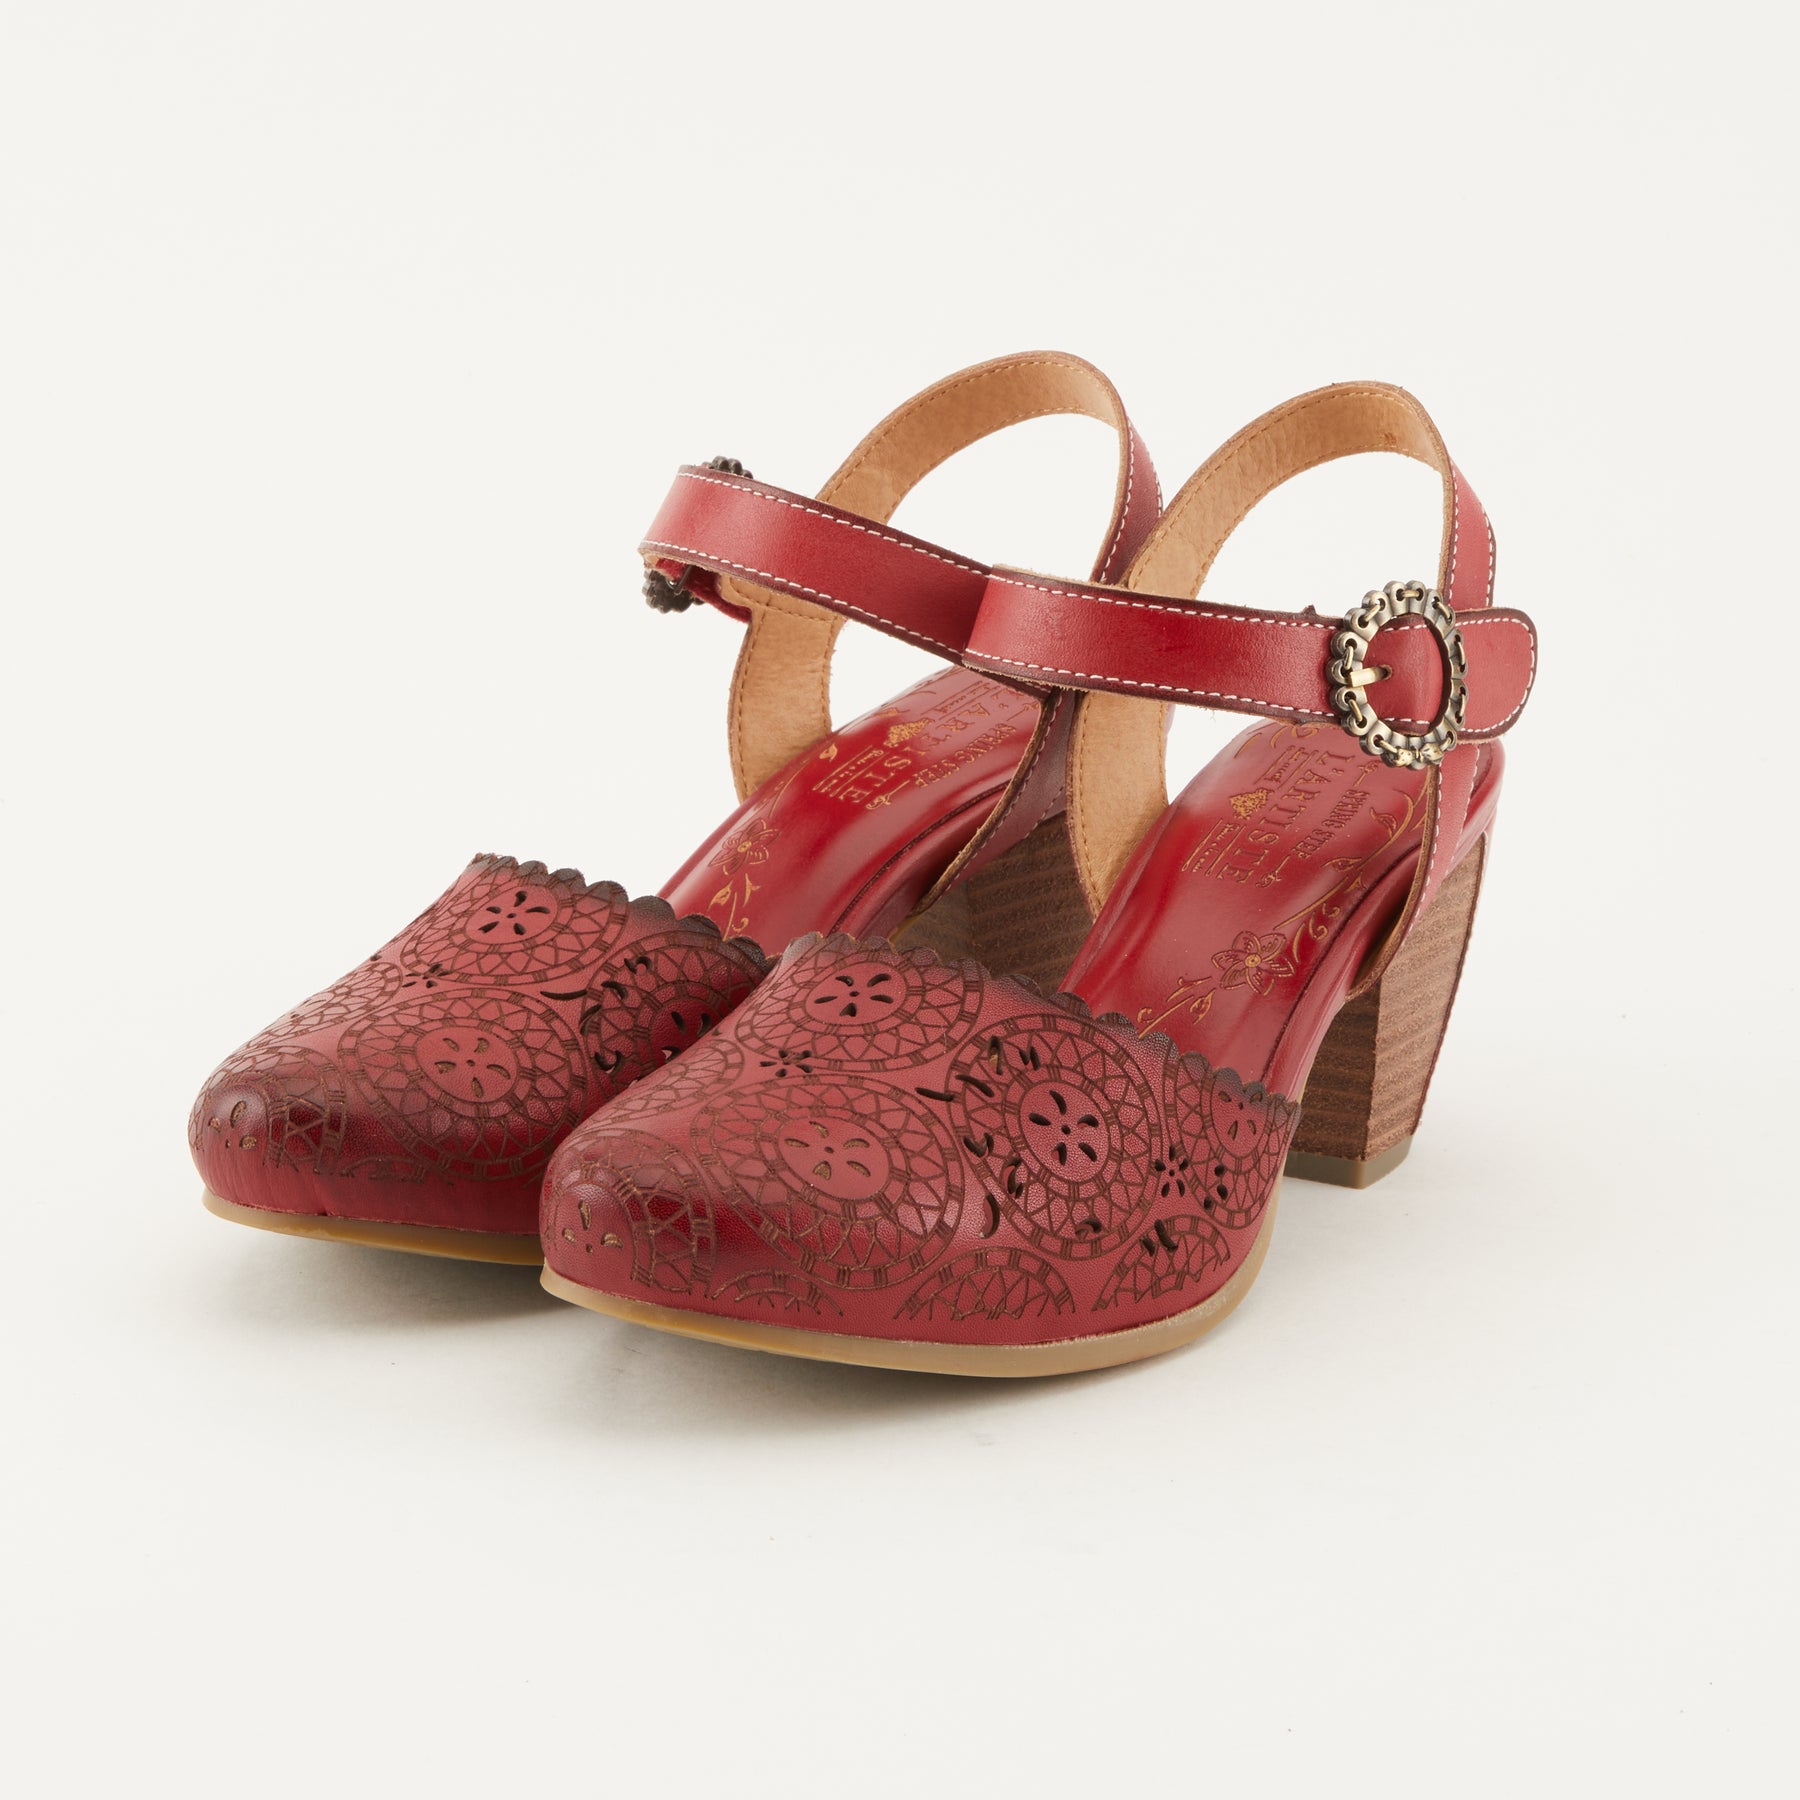 L'ARTISTE EILOOTA SANDAL by L'ARTISTE – Spring Step Shoes